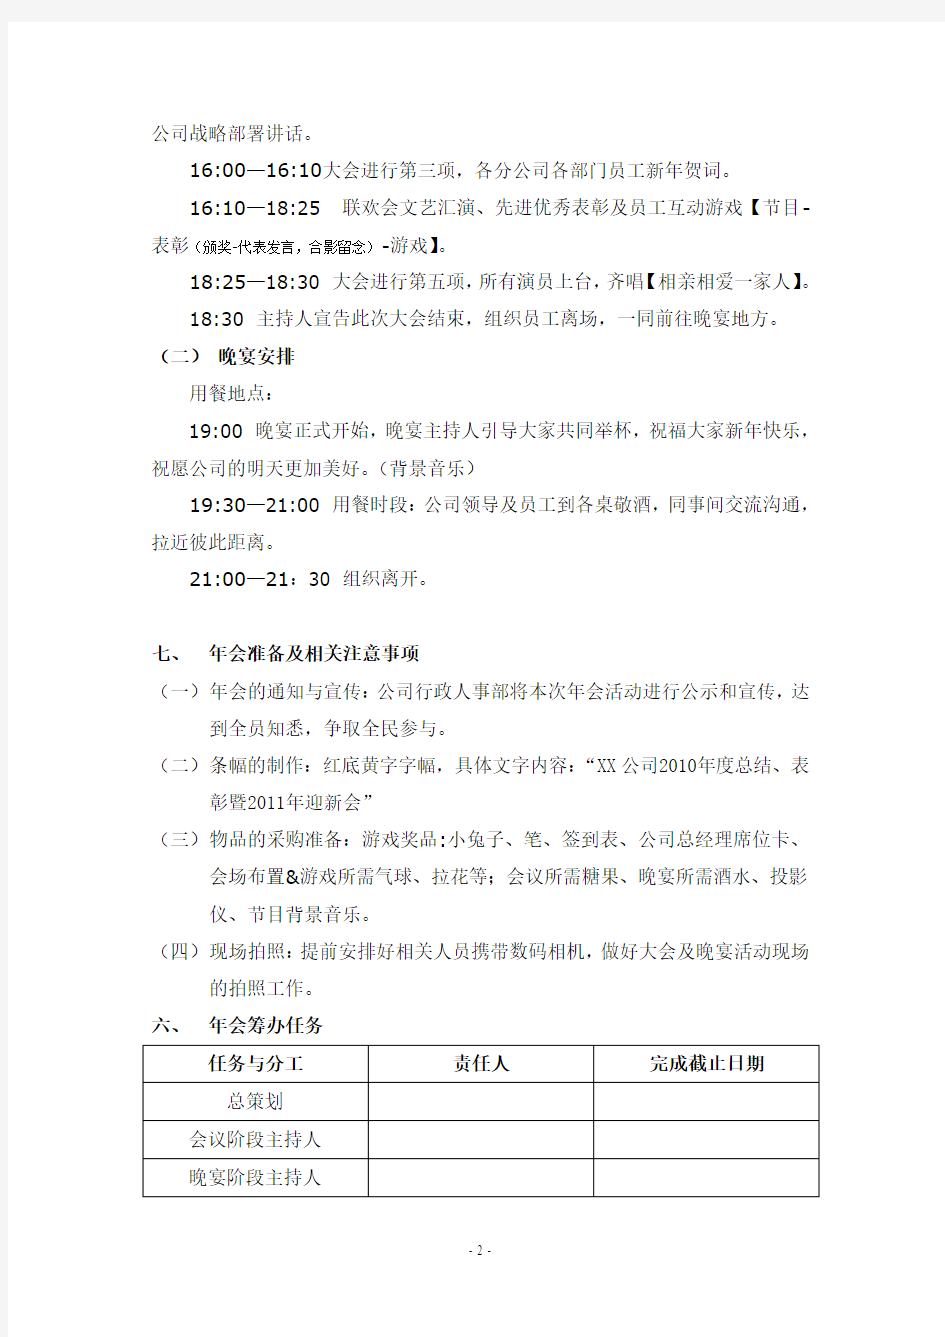 深圳集团公司年会策划方案